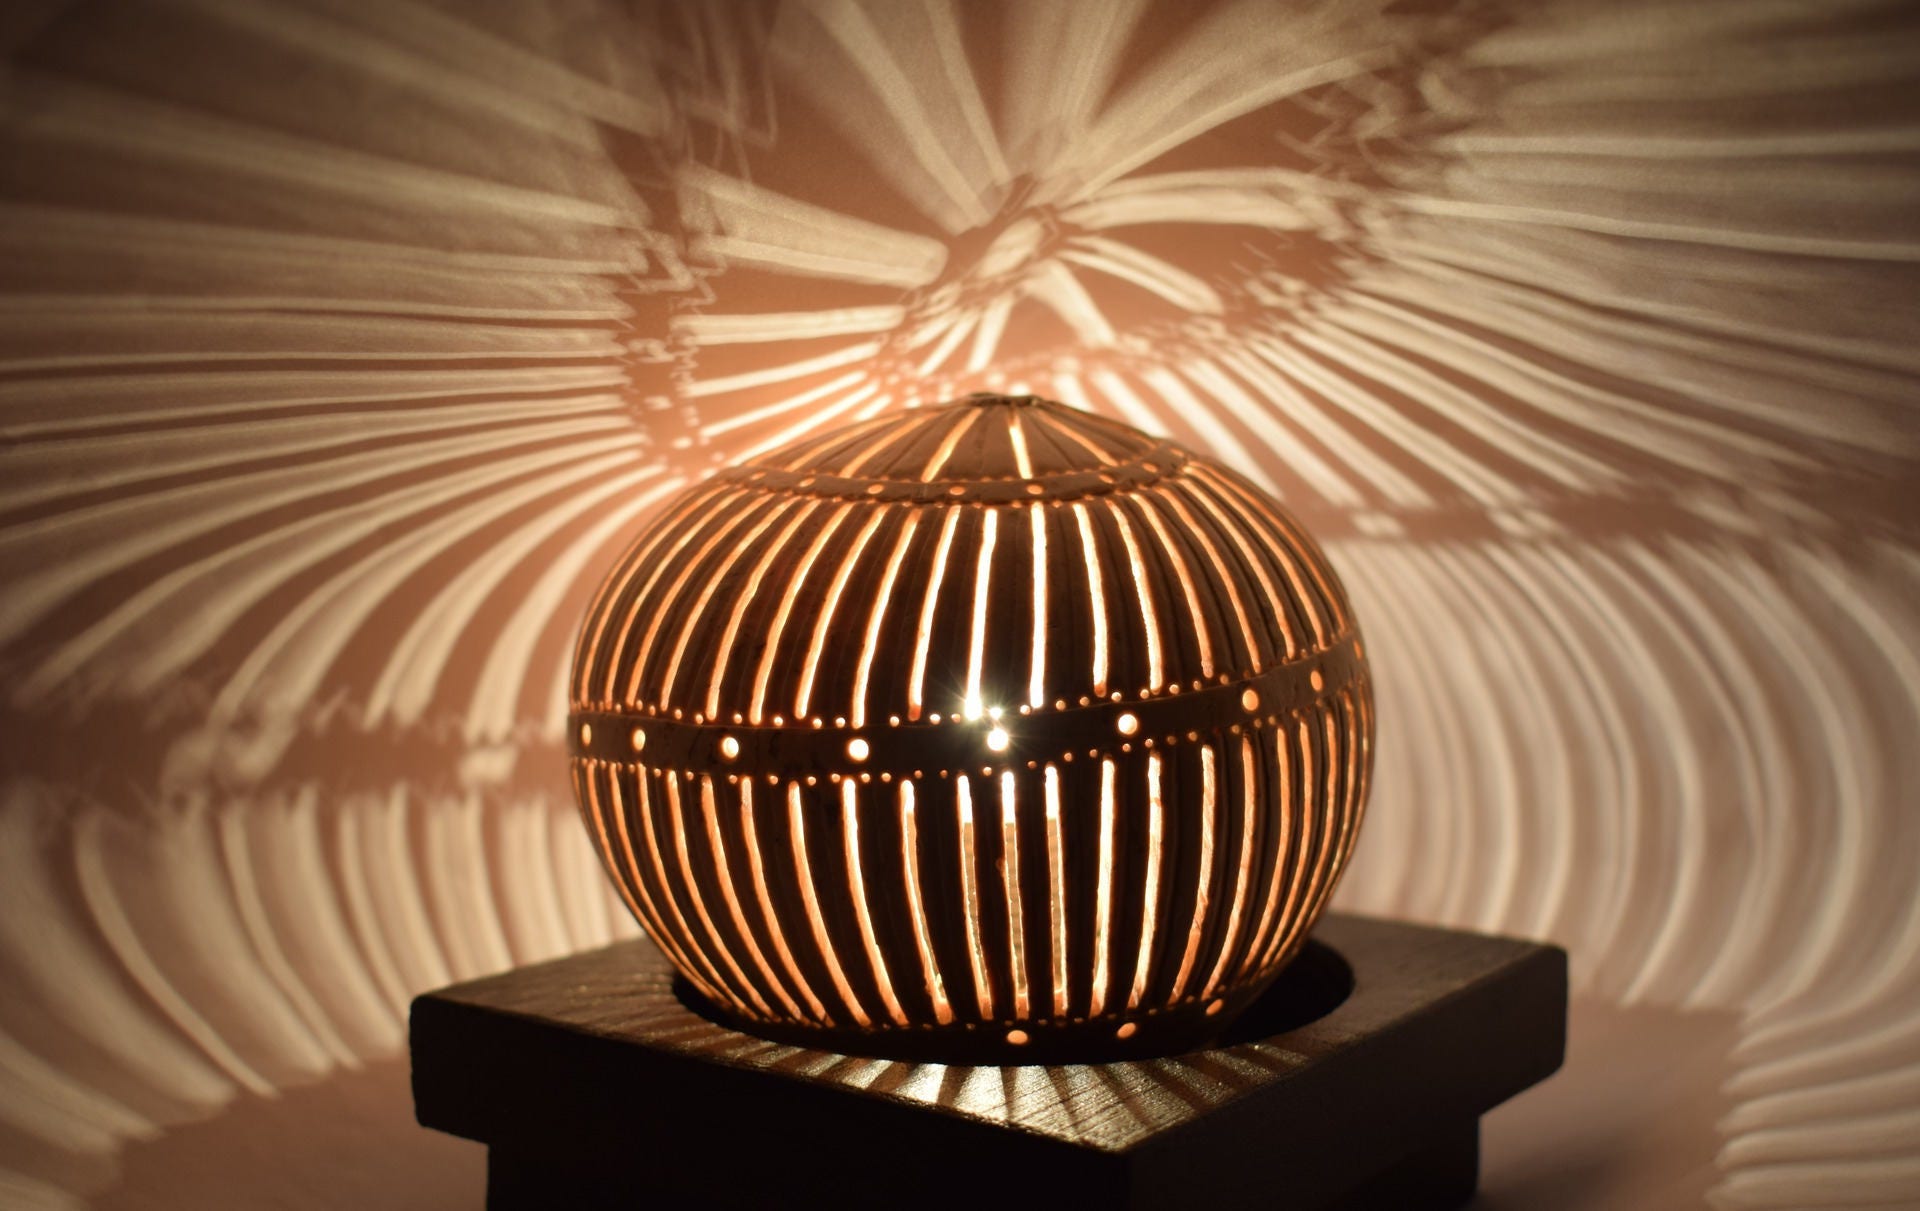 Lampe Rêve de Spiralius' , Sculpture Lumineuse en Noix Coco Sculptée